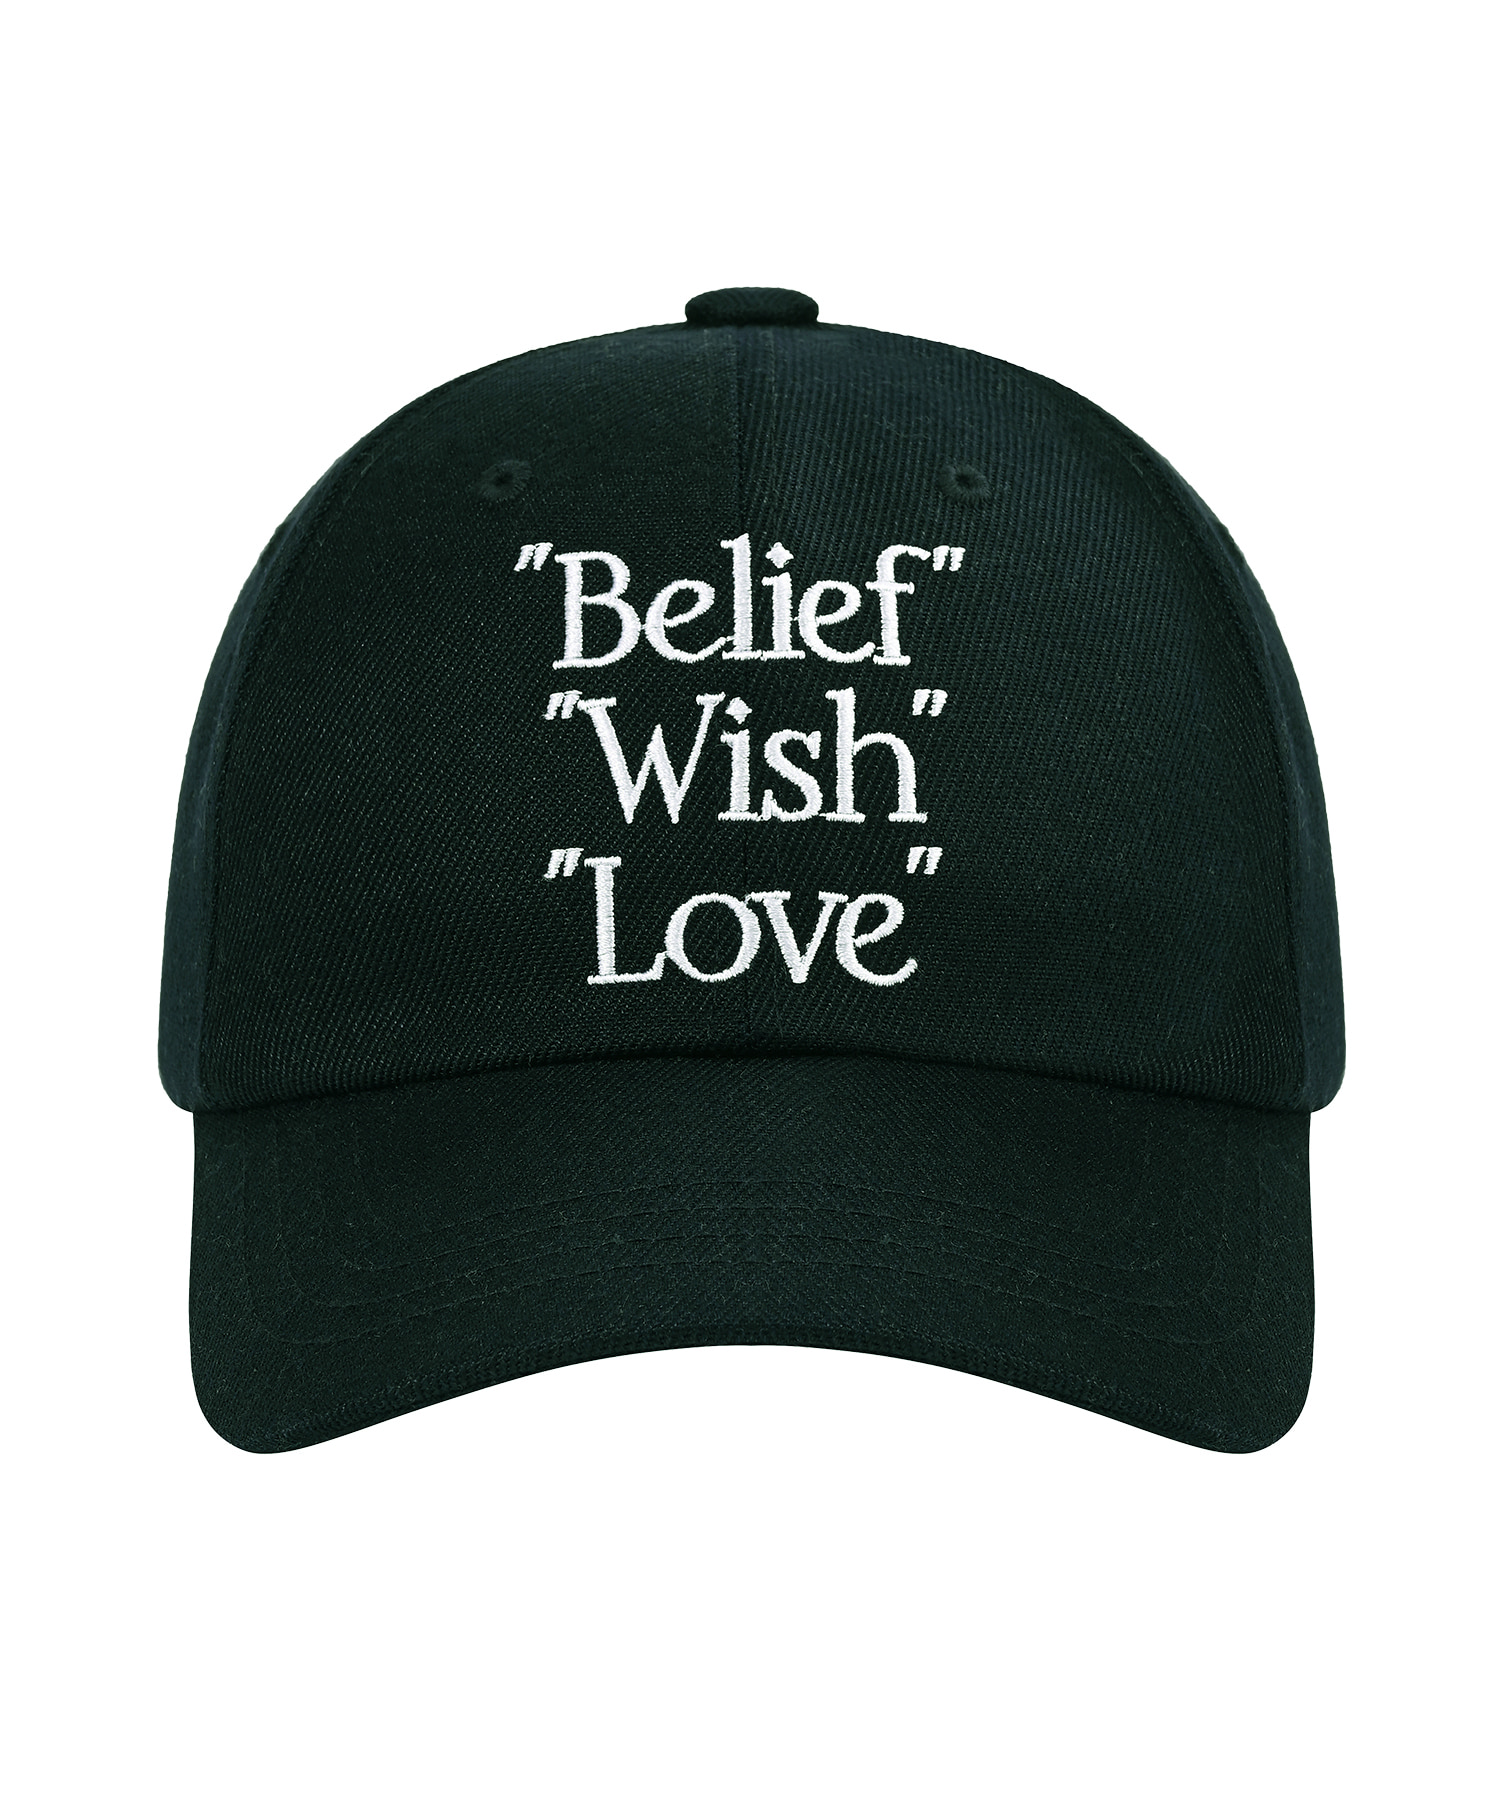 belief wish love chino ball cap in deep green